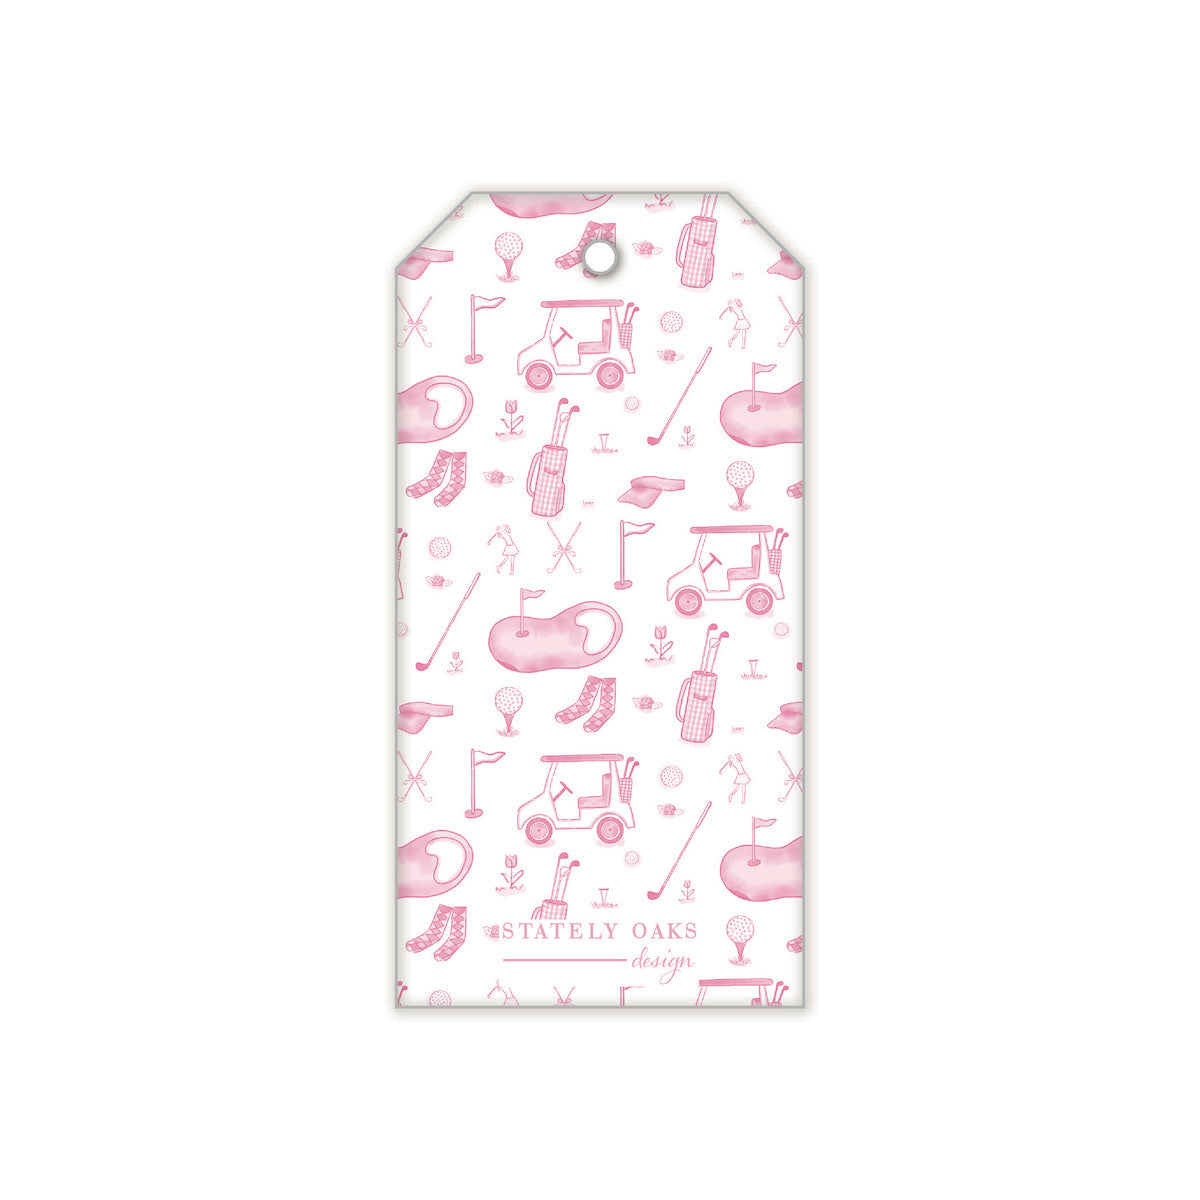 Tee-Rific Friend Pink Gift Tag